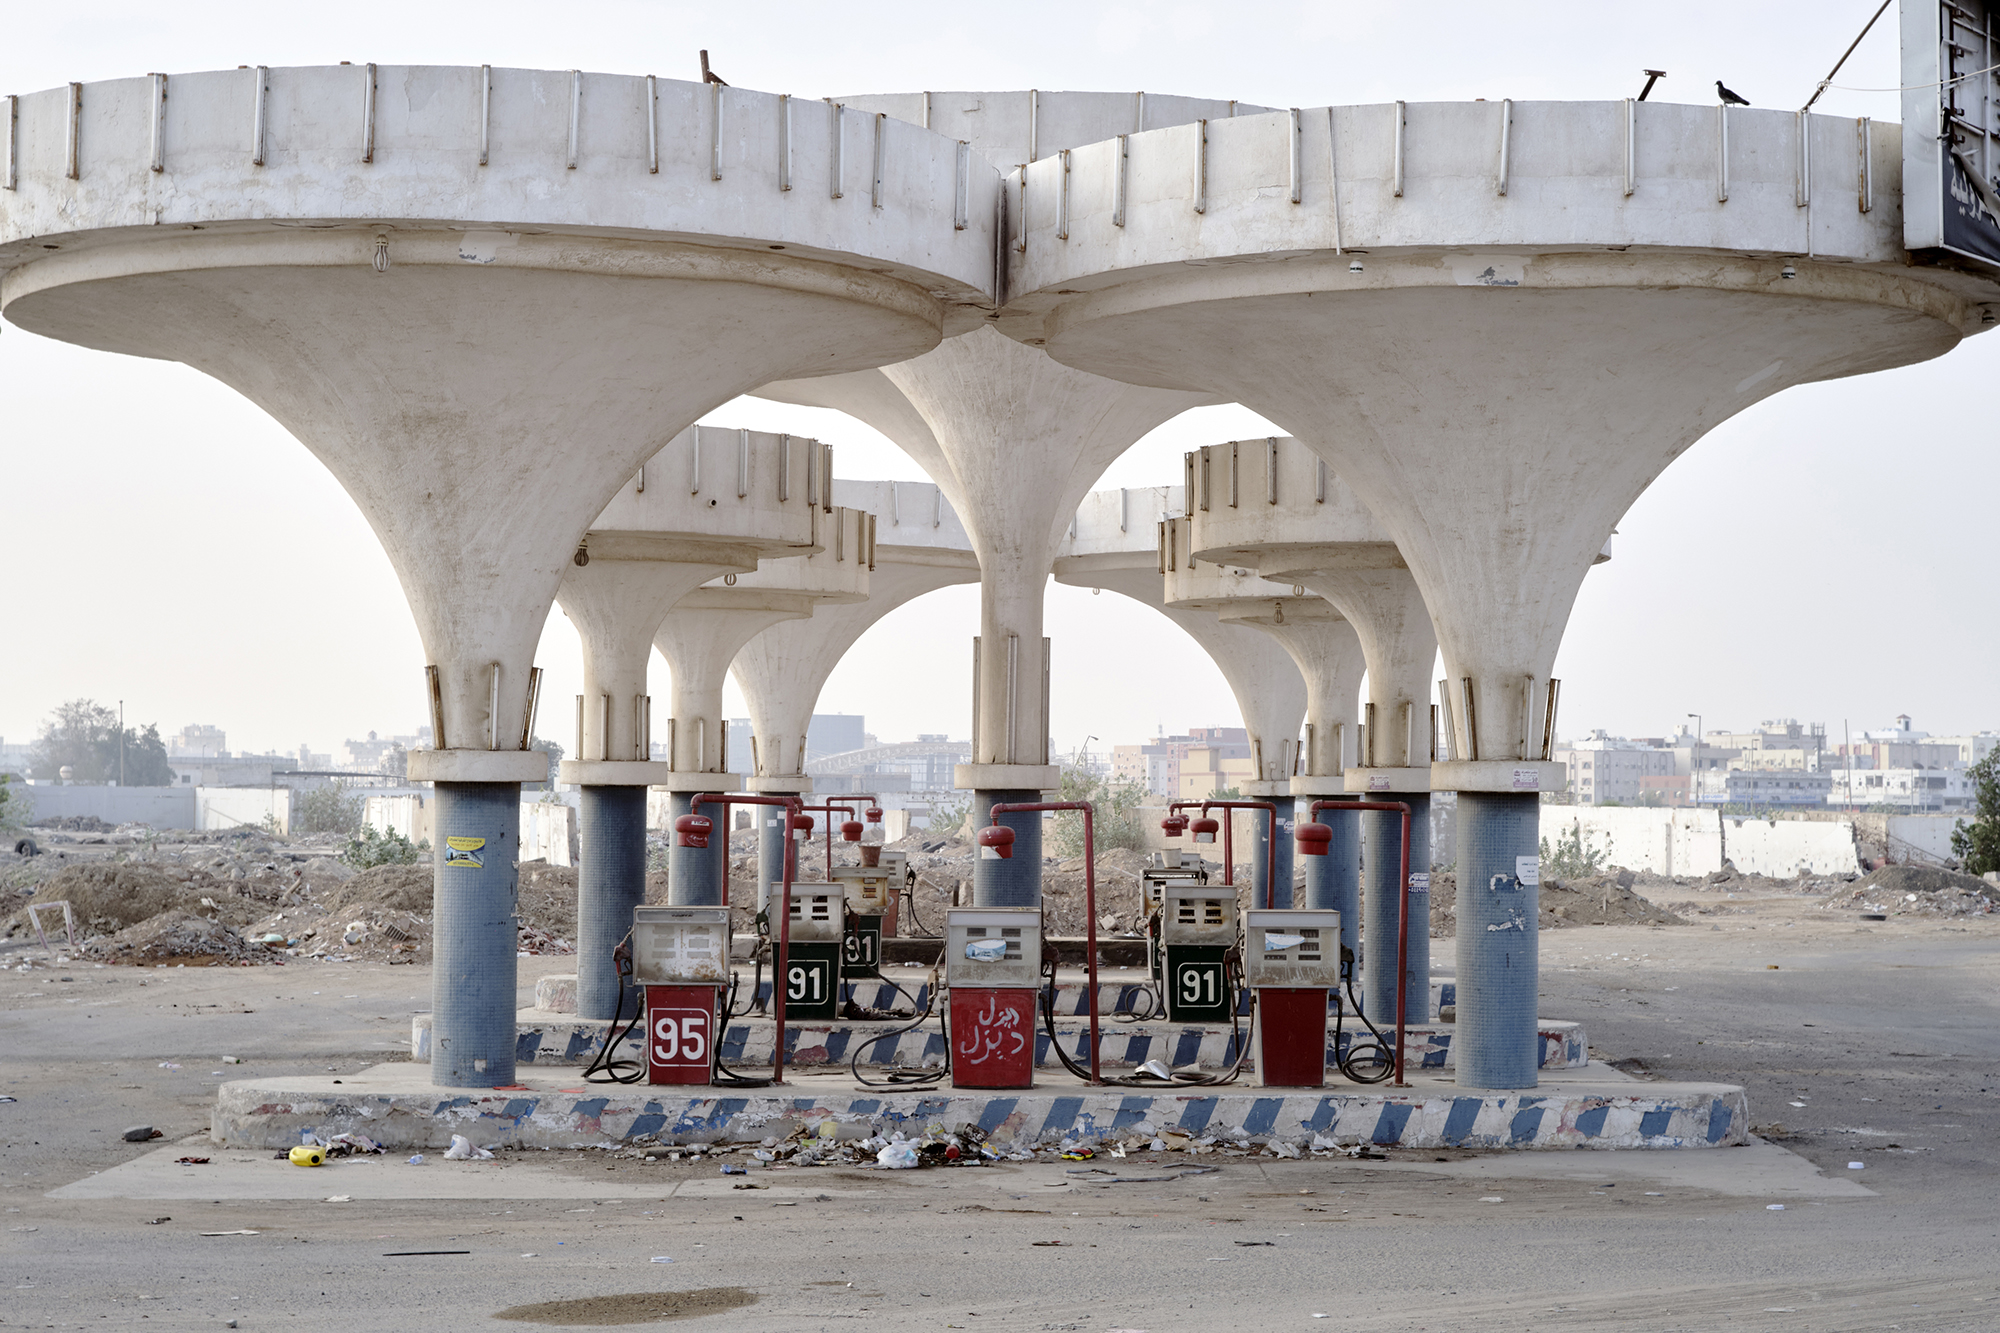 Wills_Phillip_Disused gas station in Jeddah, Saudi Arabia